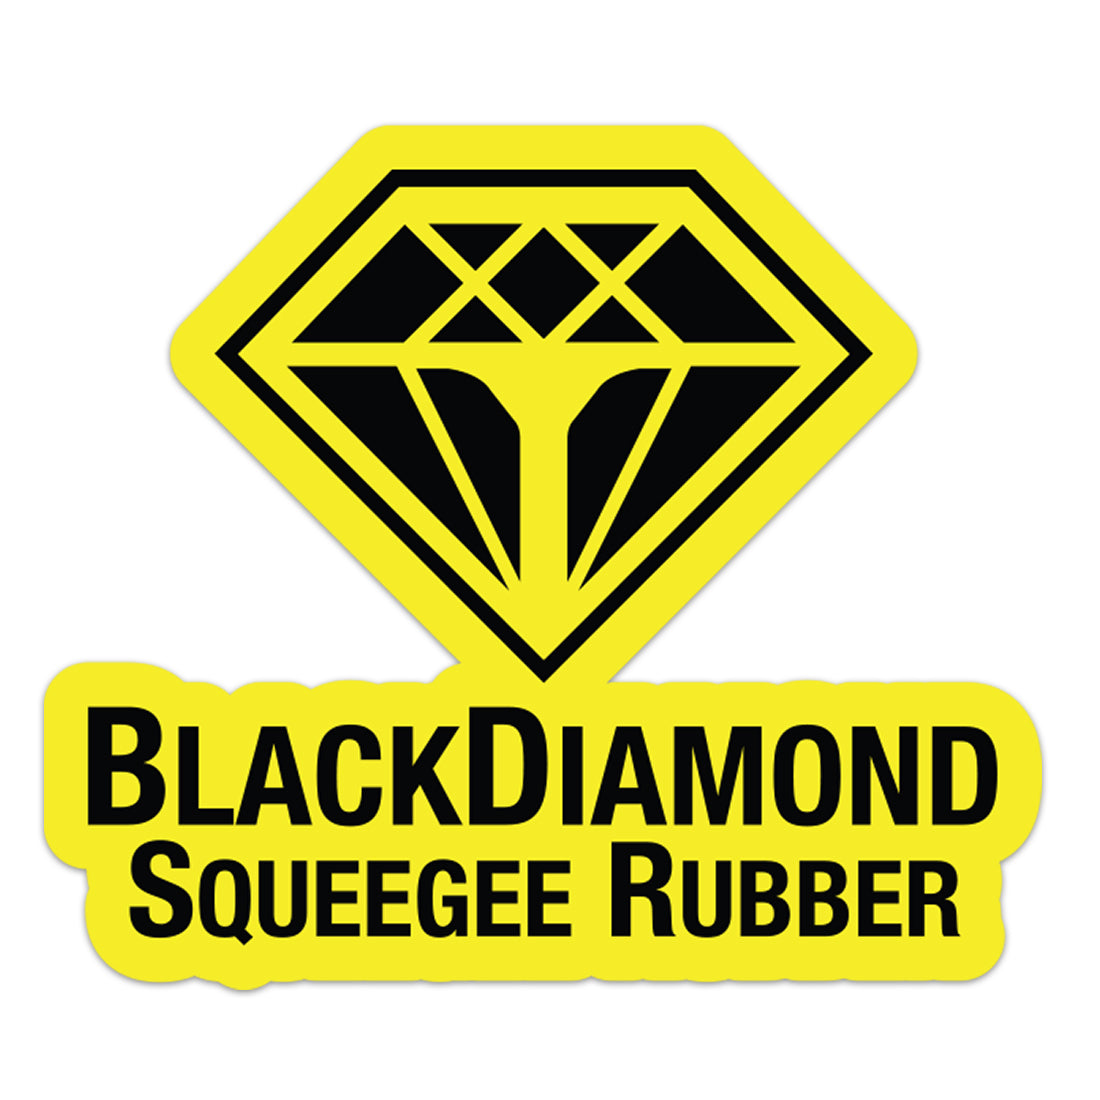 BlackDiamond Flat Top Squeegee Rubber - BlackDiamond Squeegee Rubber